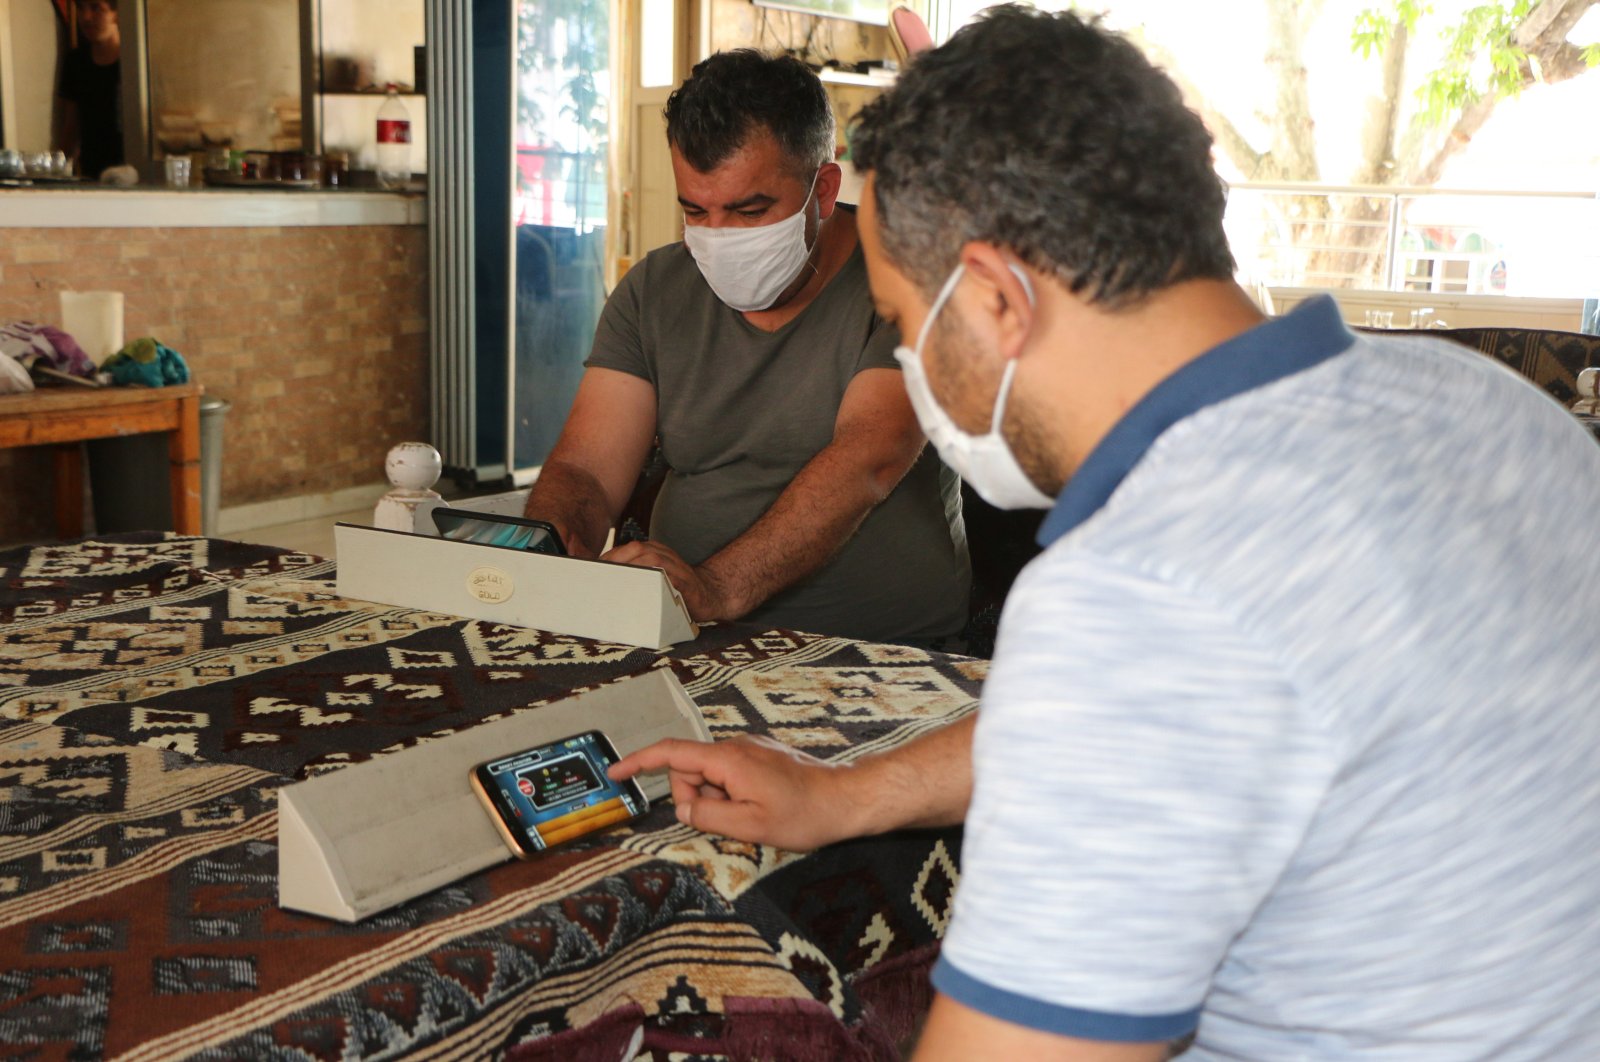 Customers play okey on their cellphones in Adıyaman, Turkey, June 2, 2020. (DHA Photo) 